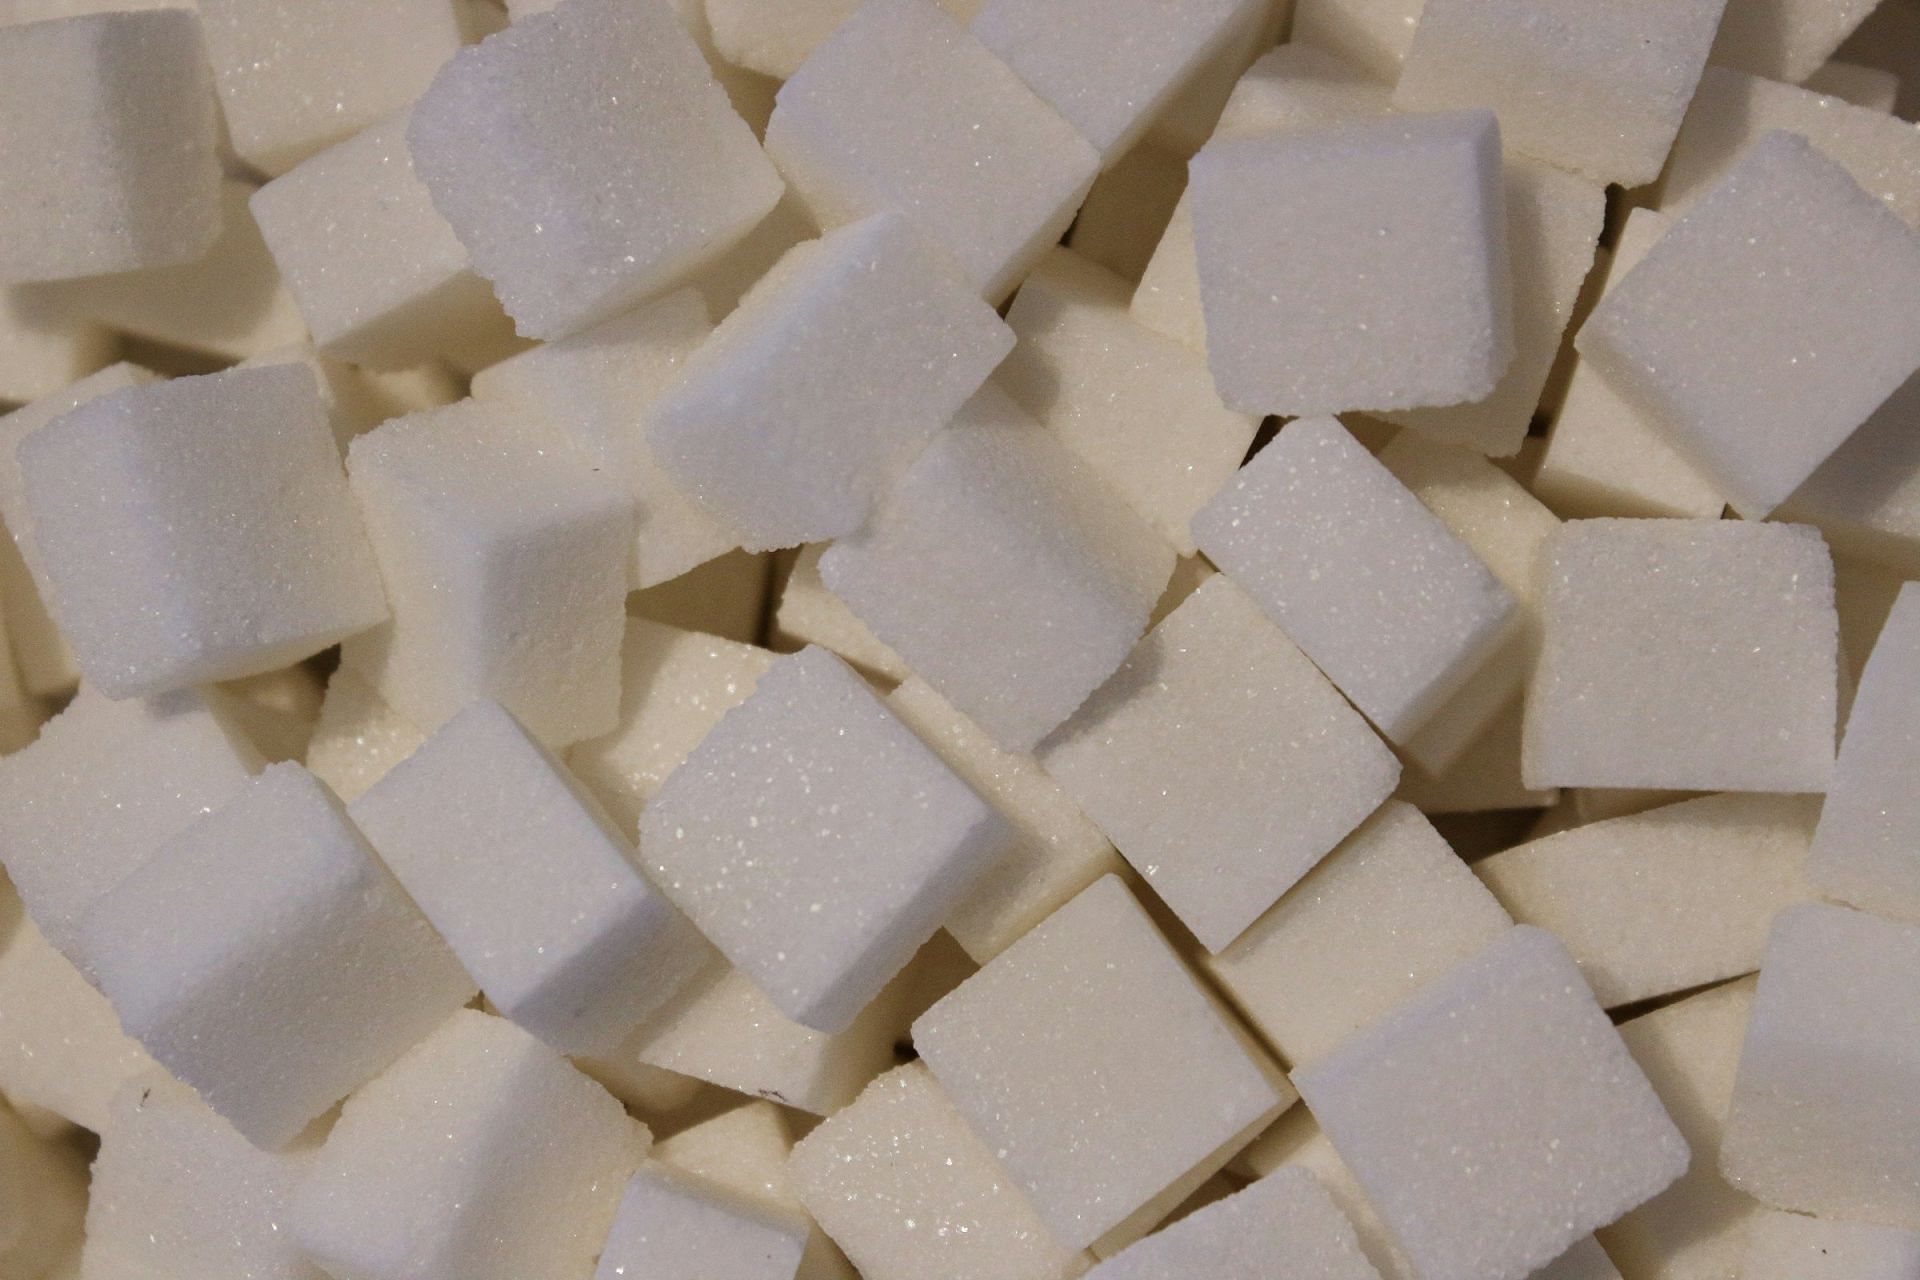 Sugar (Image via Unsplash/Jason)